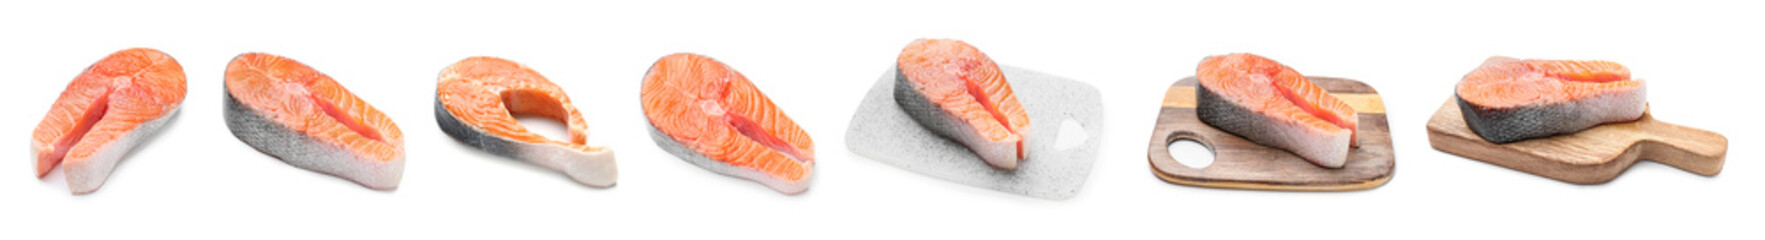 Set of raw salmon steaks on white background